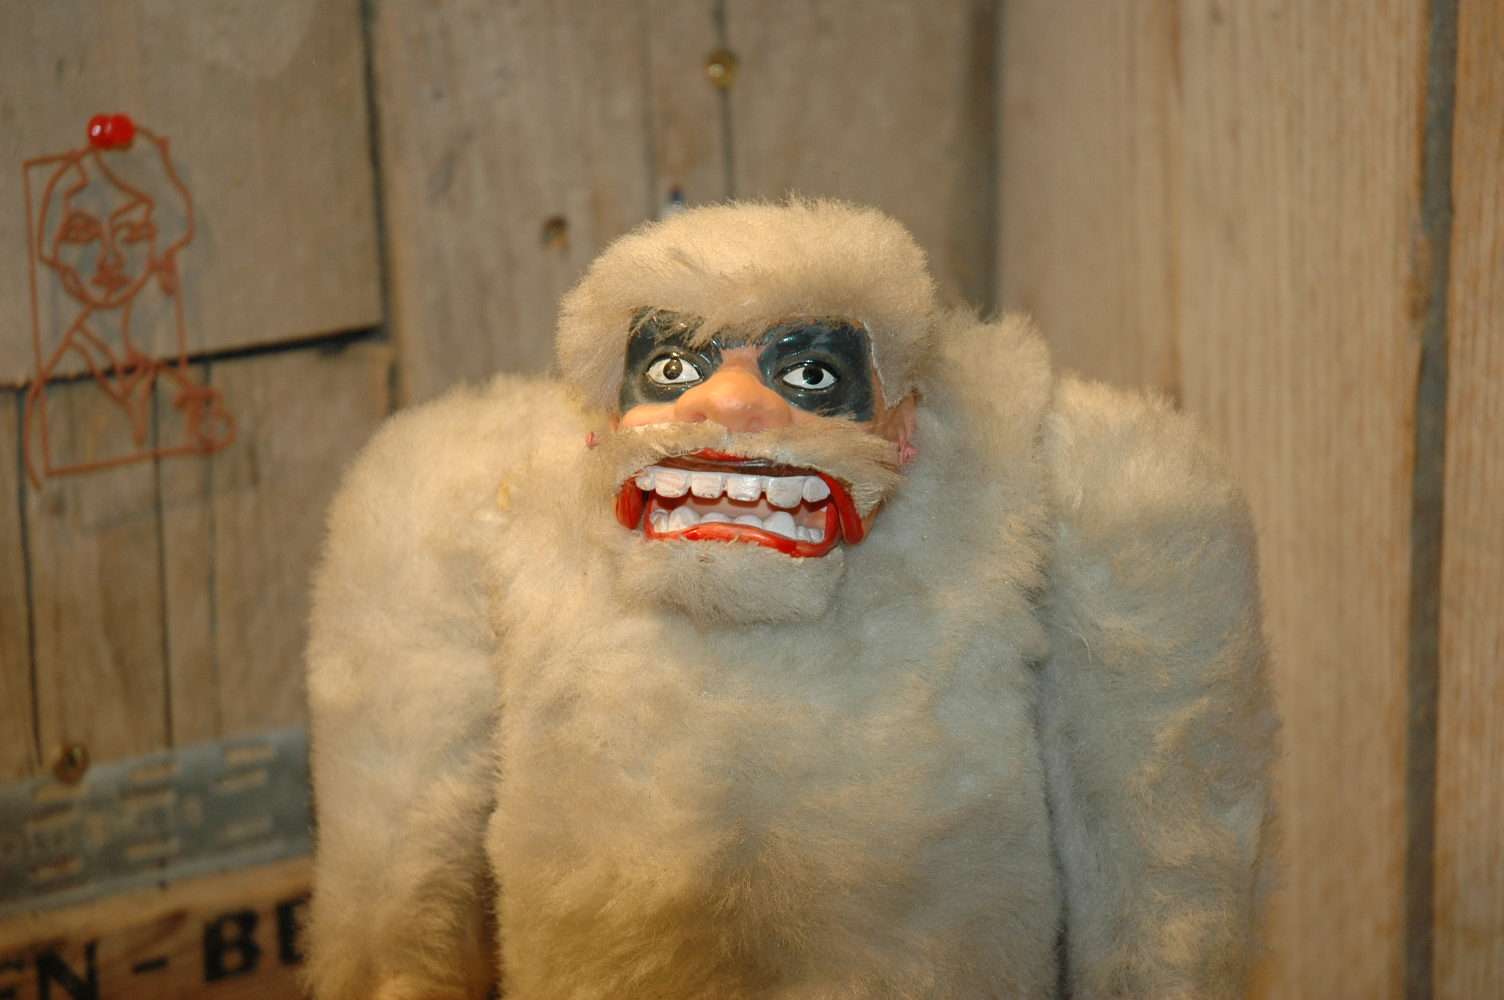 Marx Toys - Yeti The Abominable Snow Man